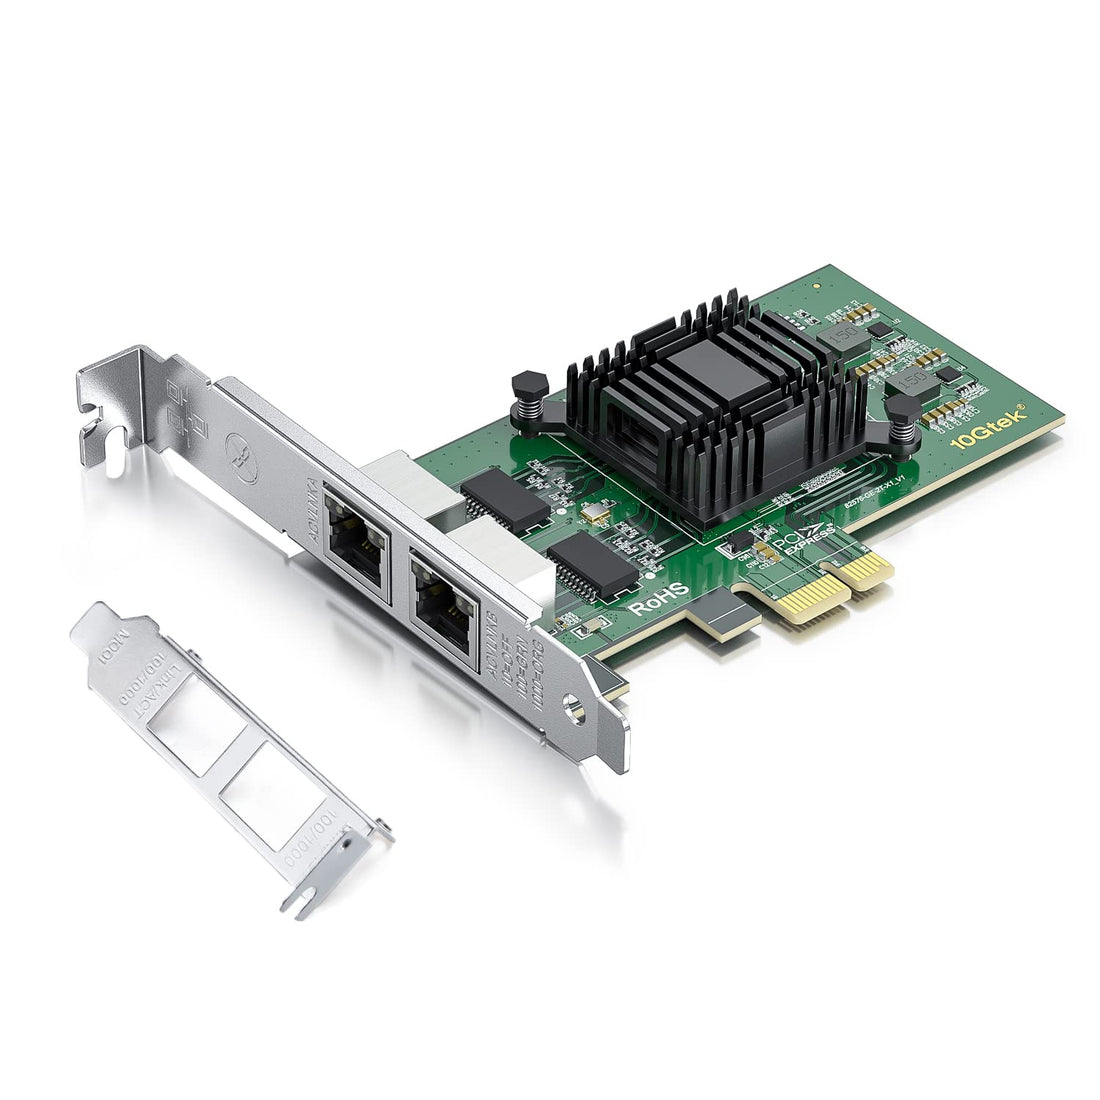 HiFiber Intel82576 Chipset 1G Gigabit Ethernet Converged Network Adapter (NIC) Dual RJ45 Port